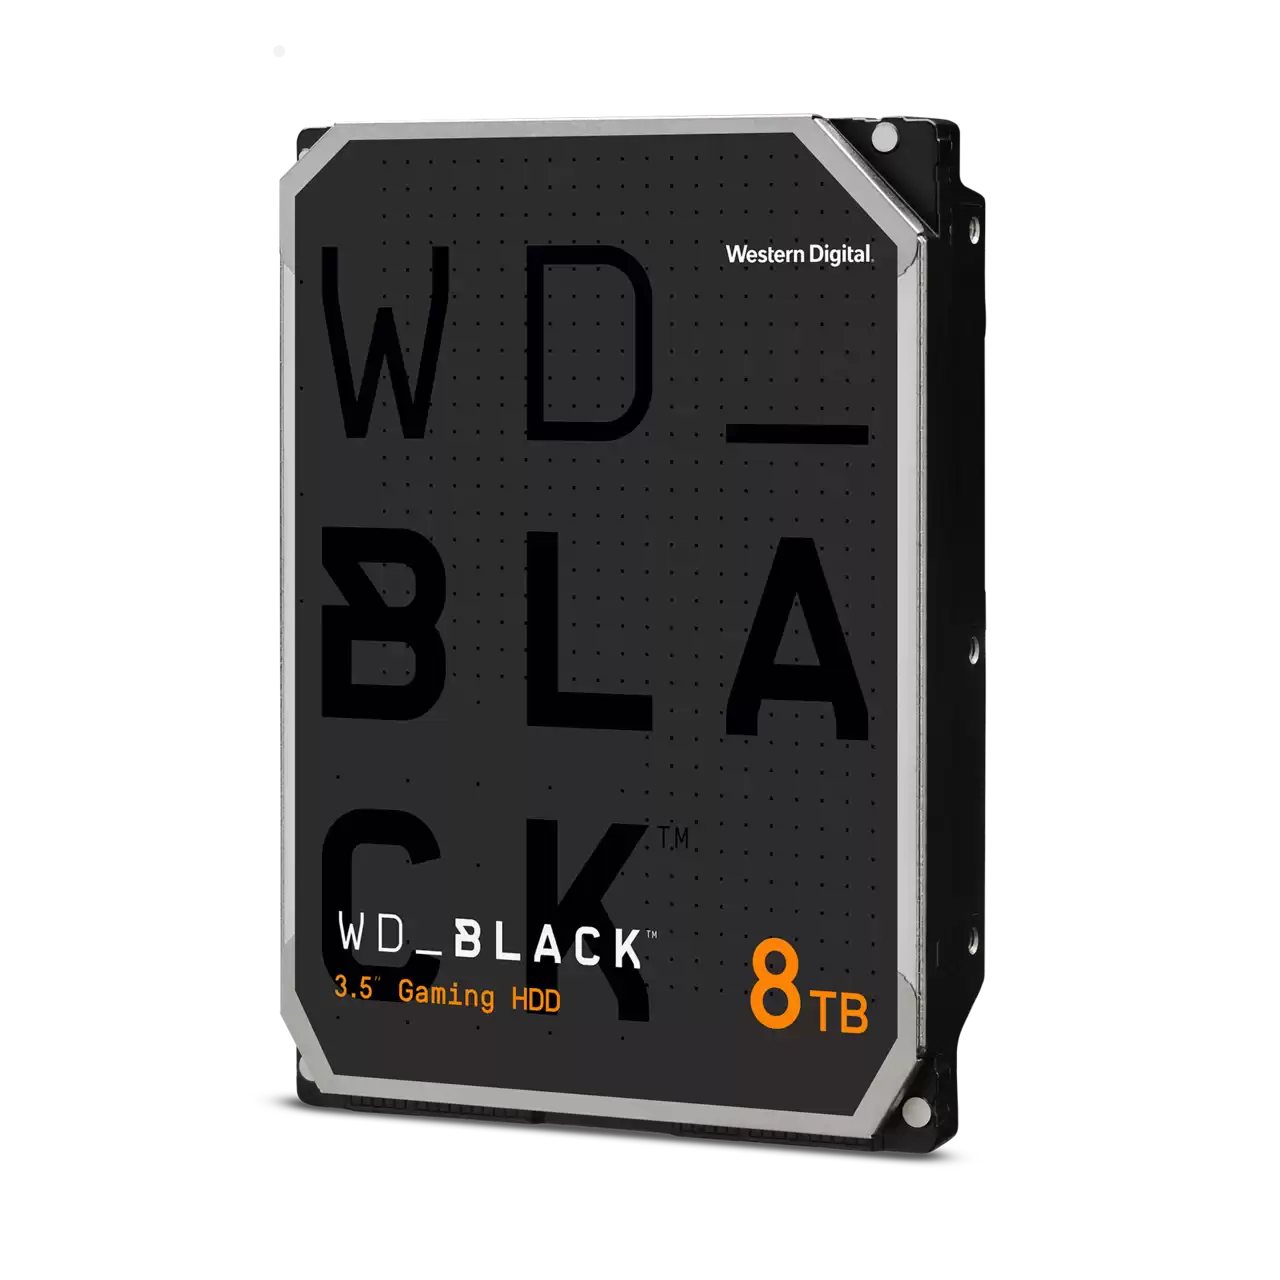 WD Black 8 TB Performance Desktop HDD WD8001FZBX-hdd-WESTERN DIGITAL-computerspace